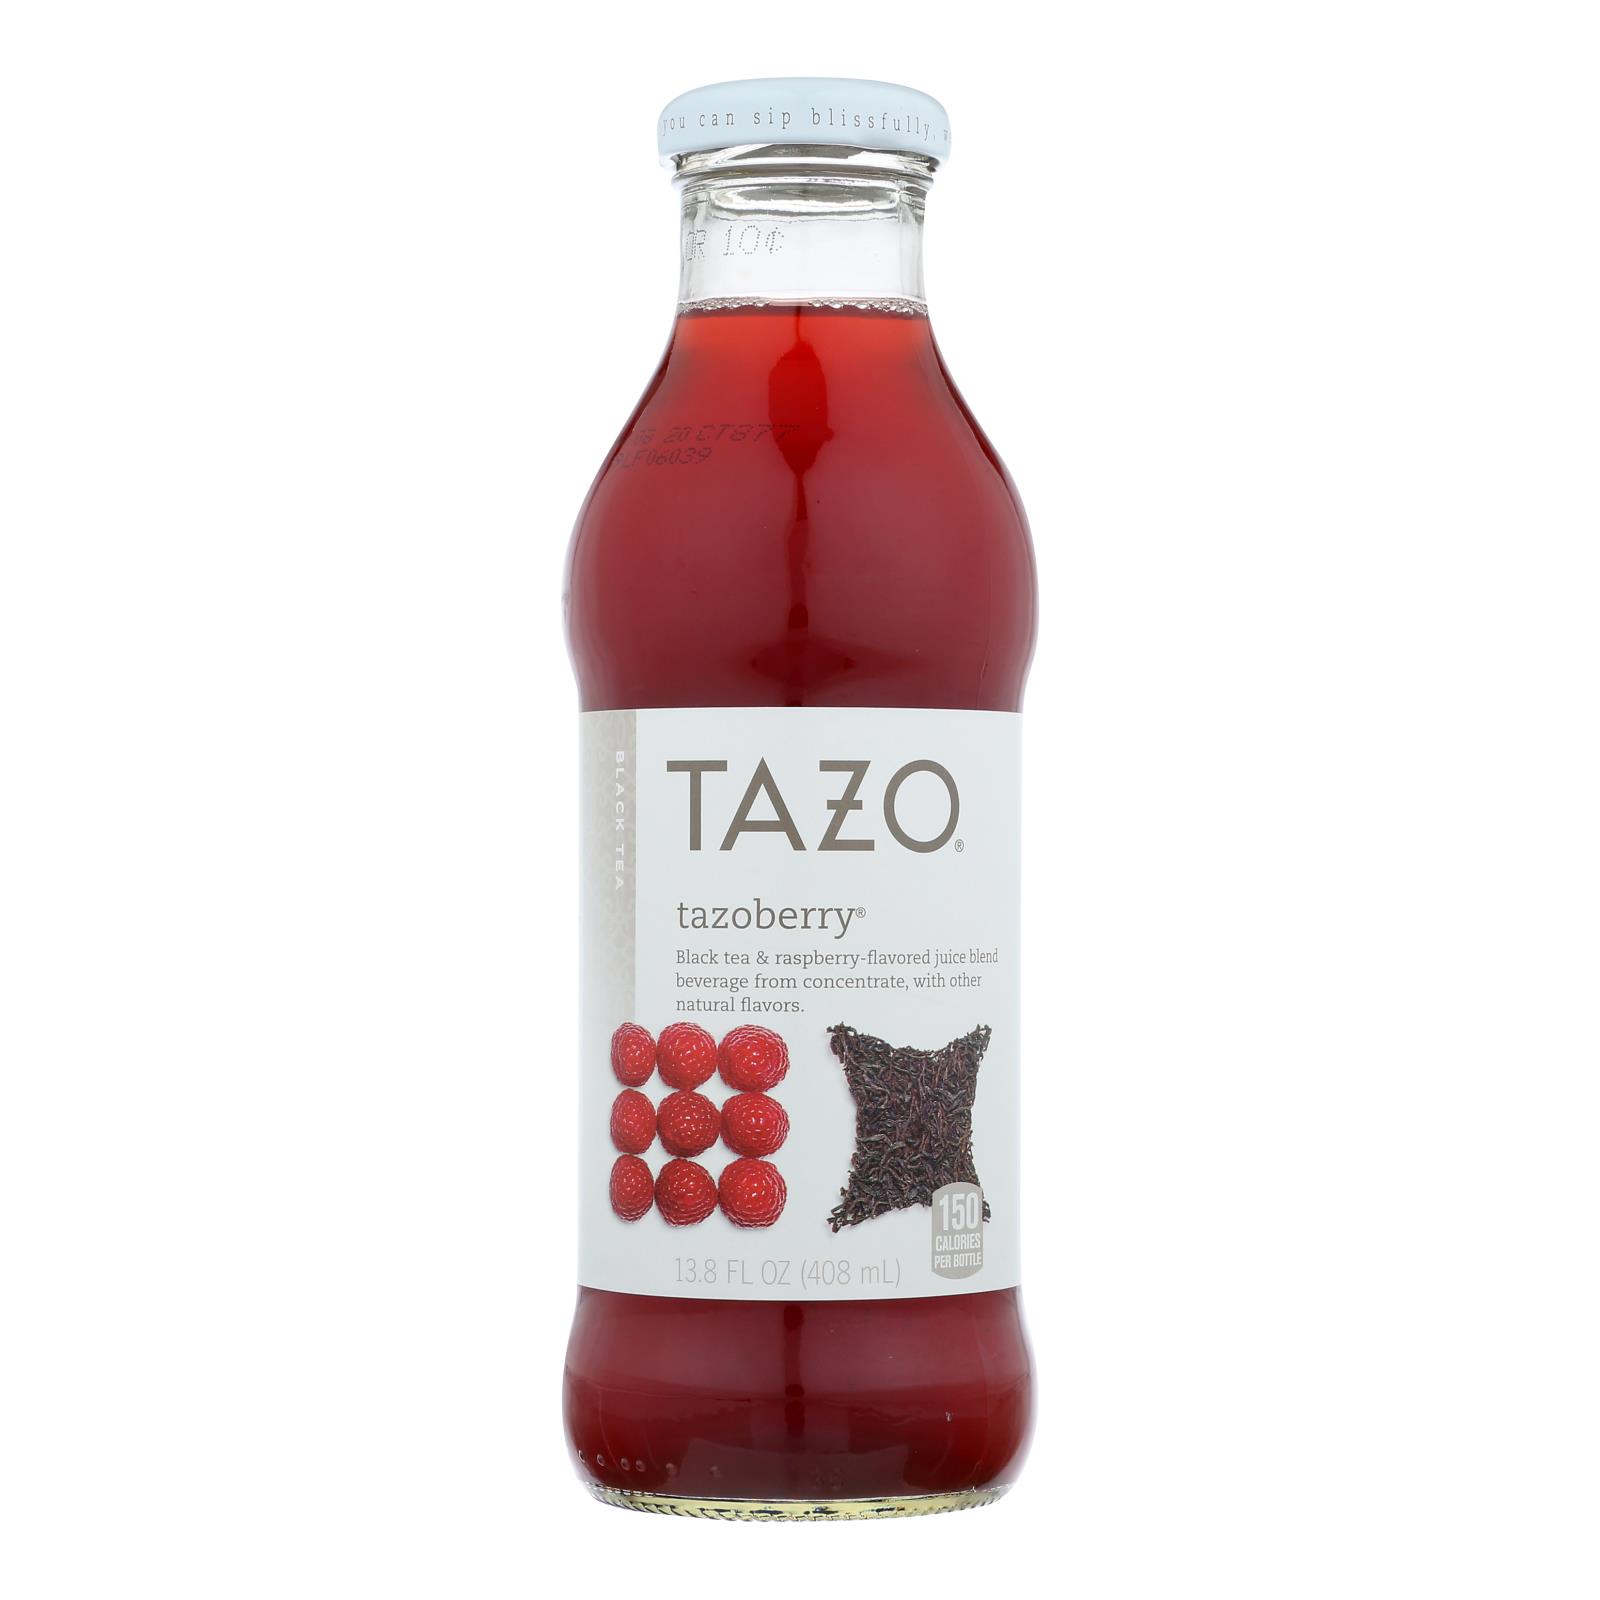 Tazo Tazoberry Black Tea & Raspberry-Flavored Juice Blend - 12개 묶음상품 - 13.8 FZ